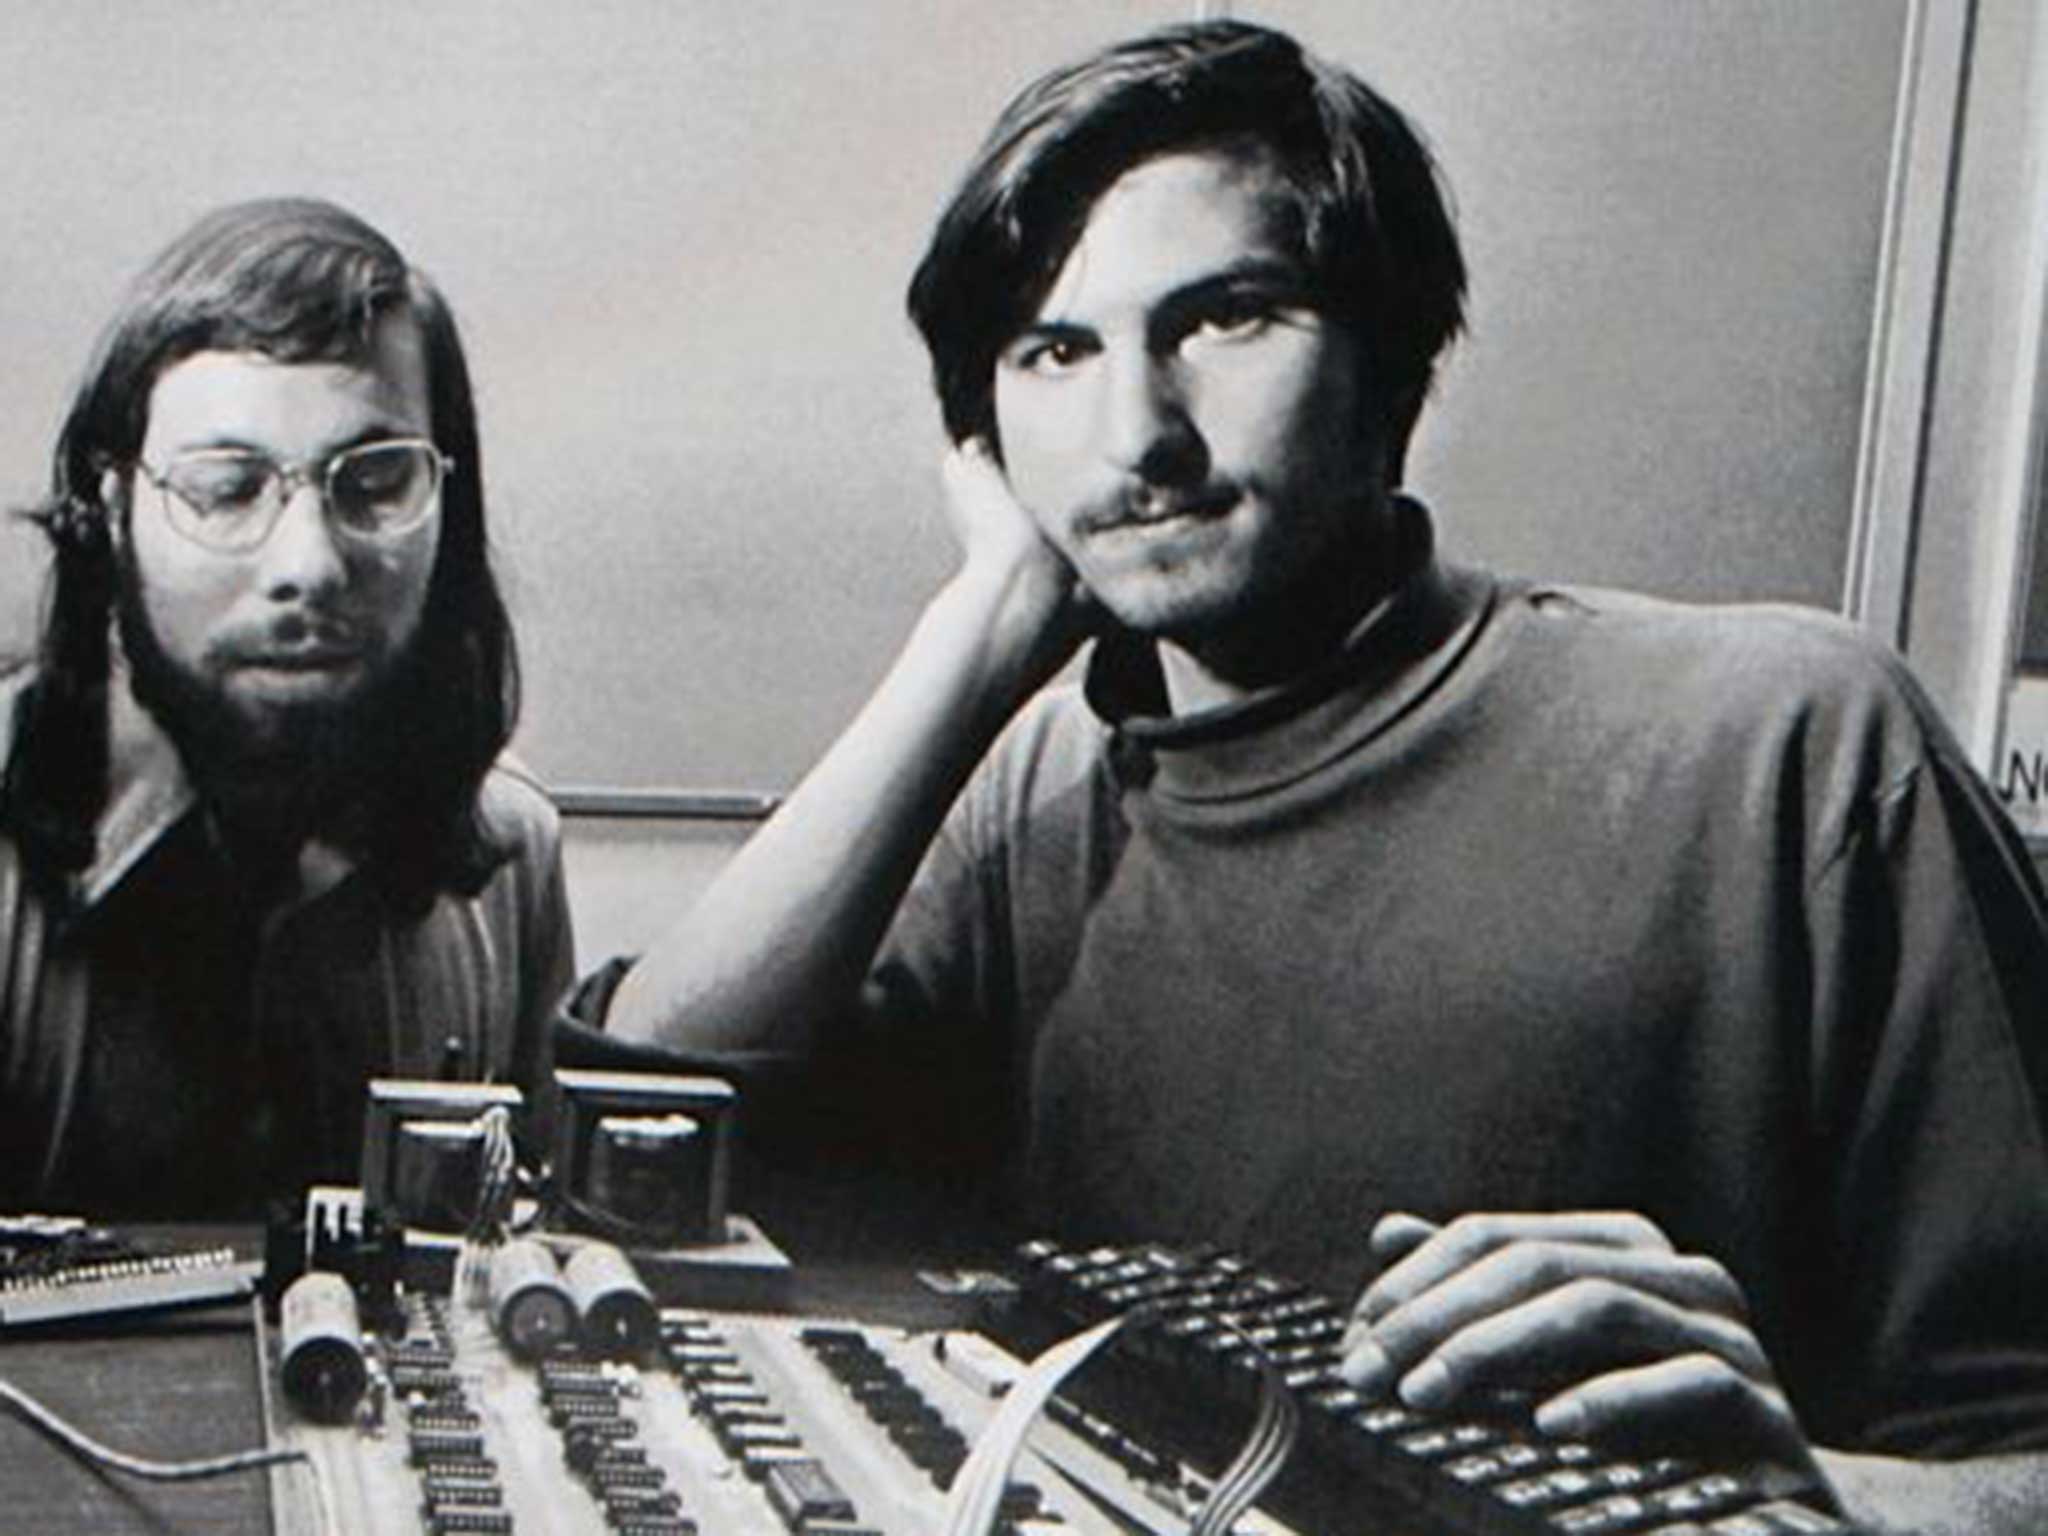 Steve Jobs launches the 1984 Macintosh